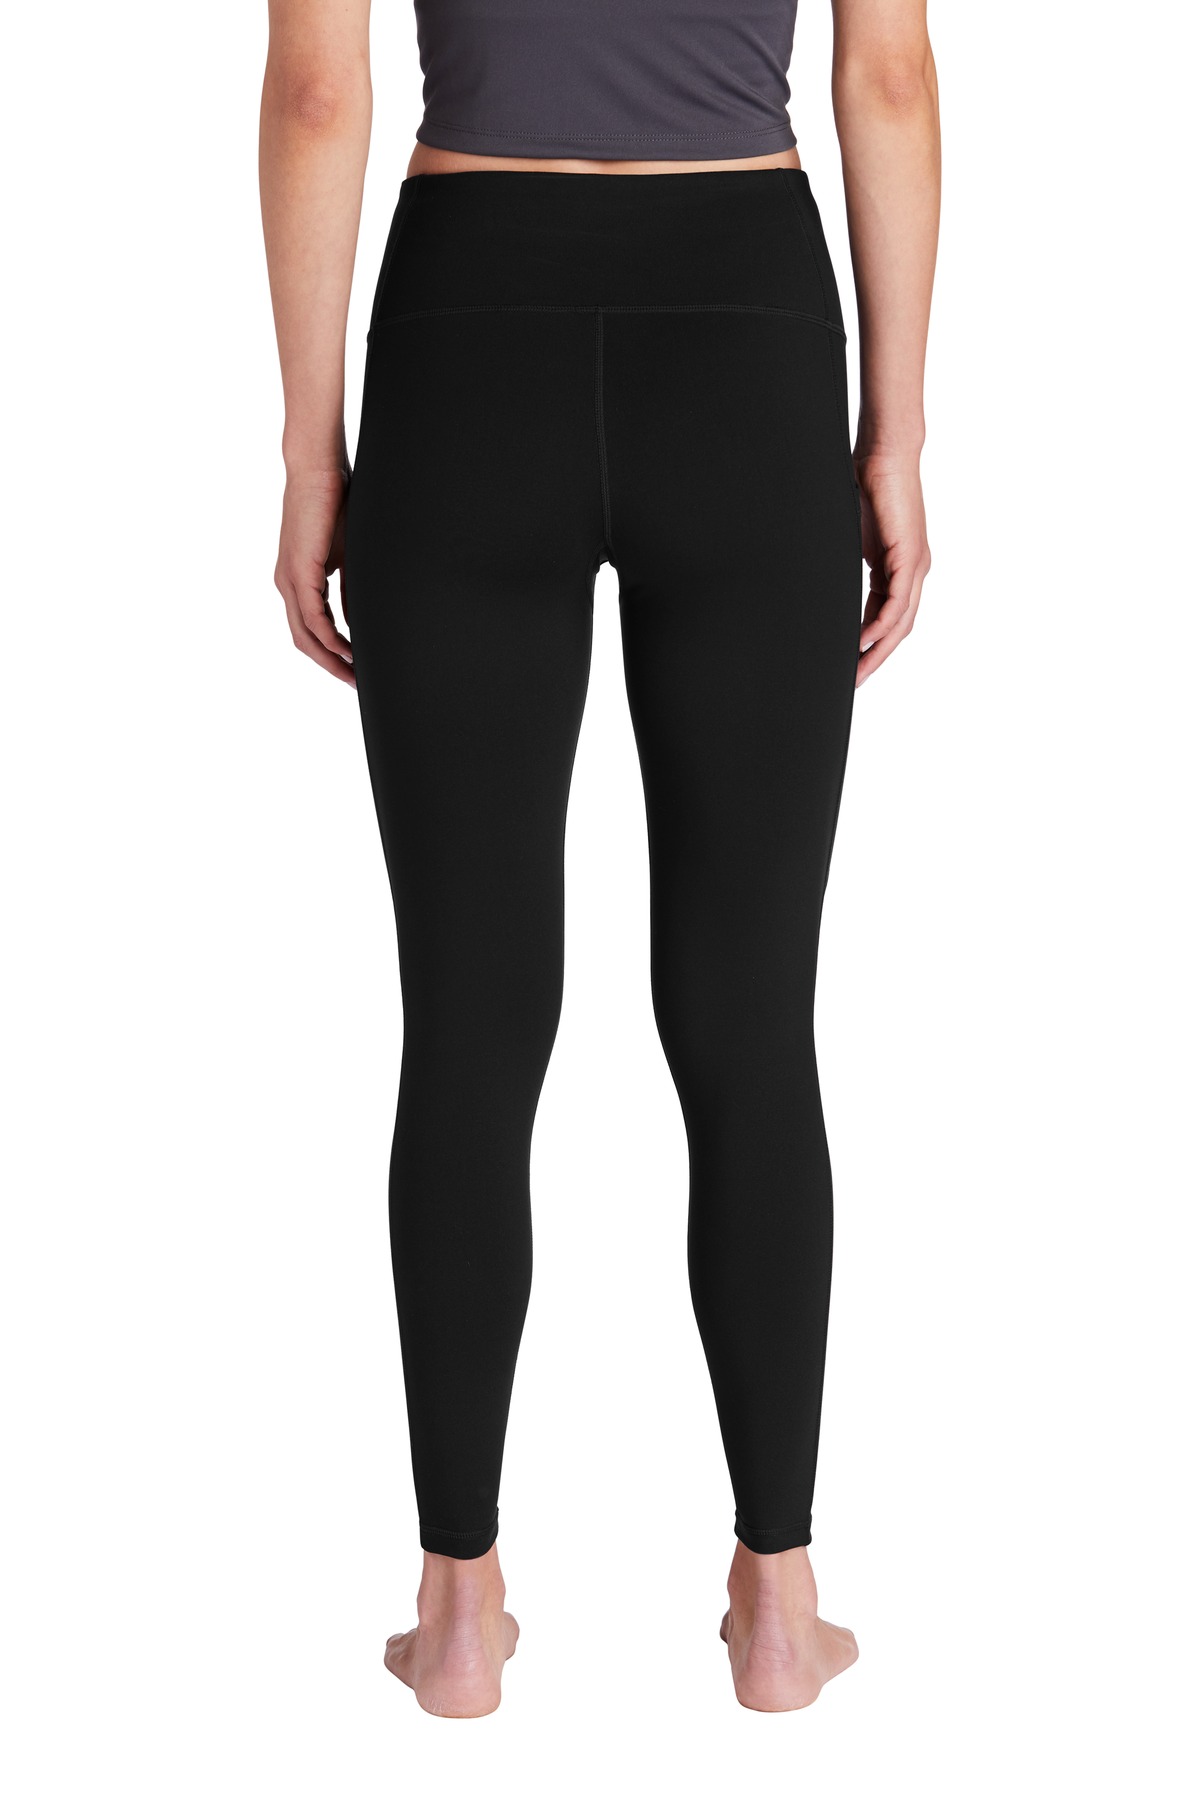 Sport-Tek ® Ladies High Rise 7/8 Legging LPST891 - Custom Shirt Shop